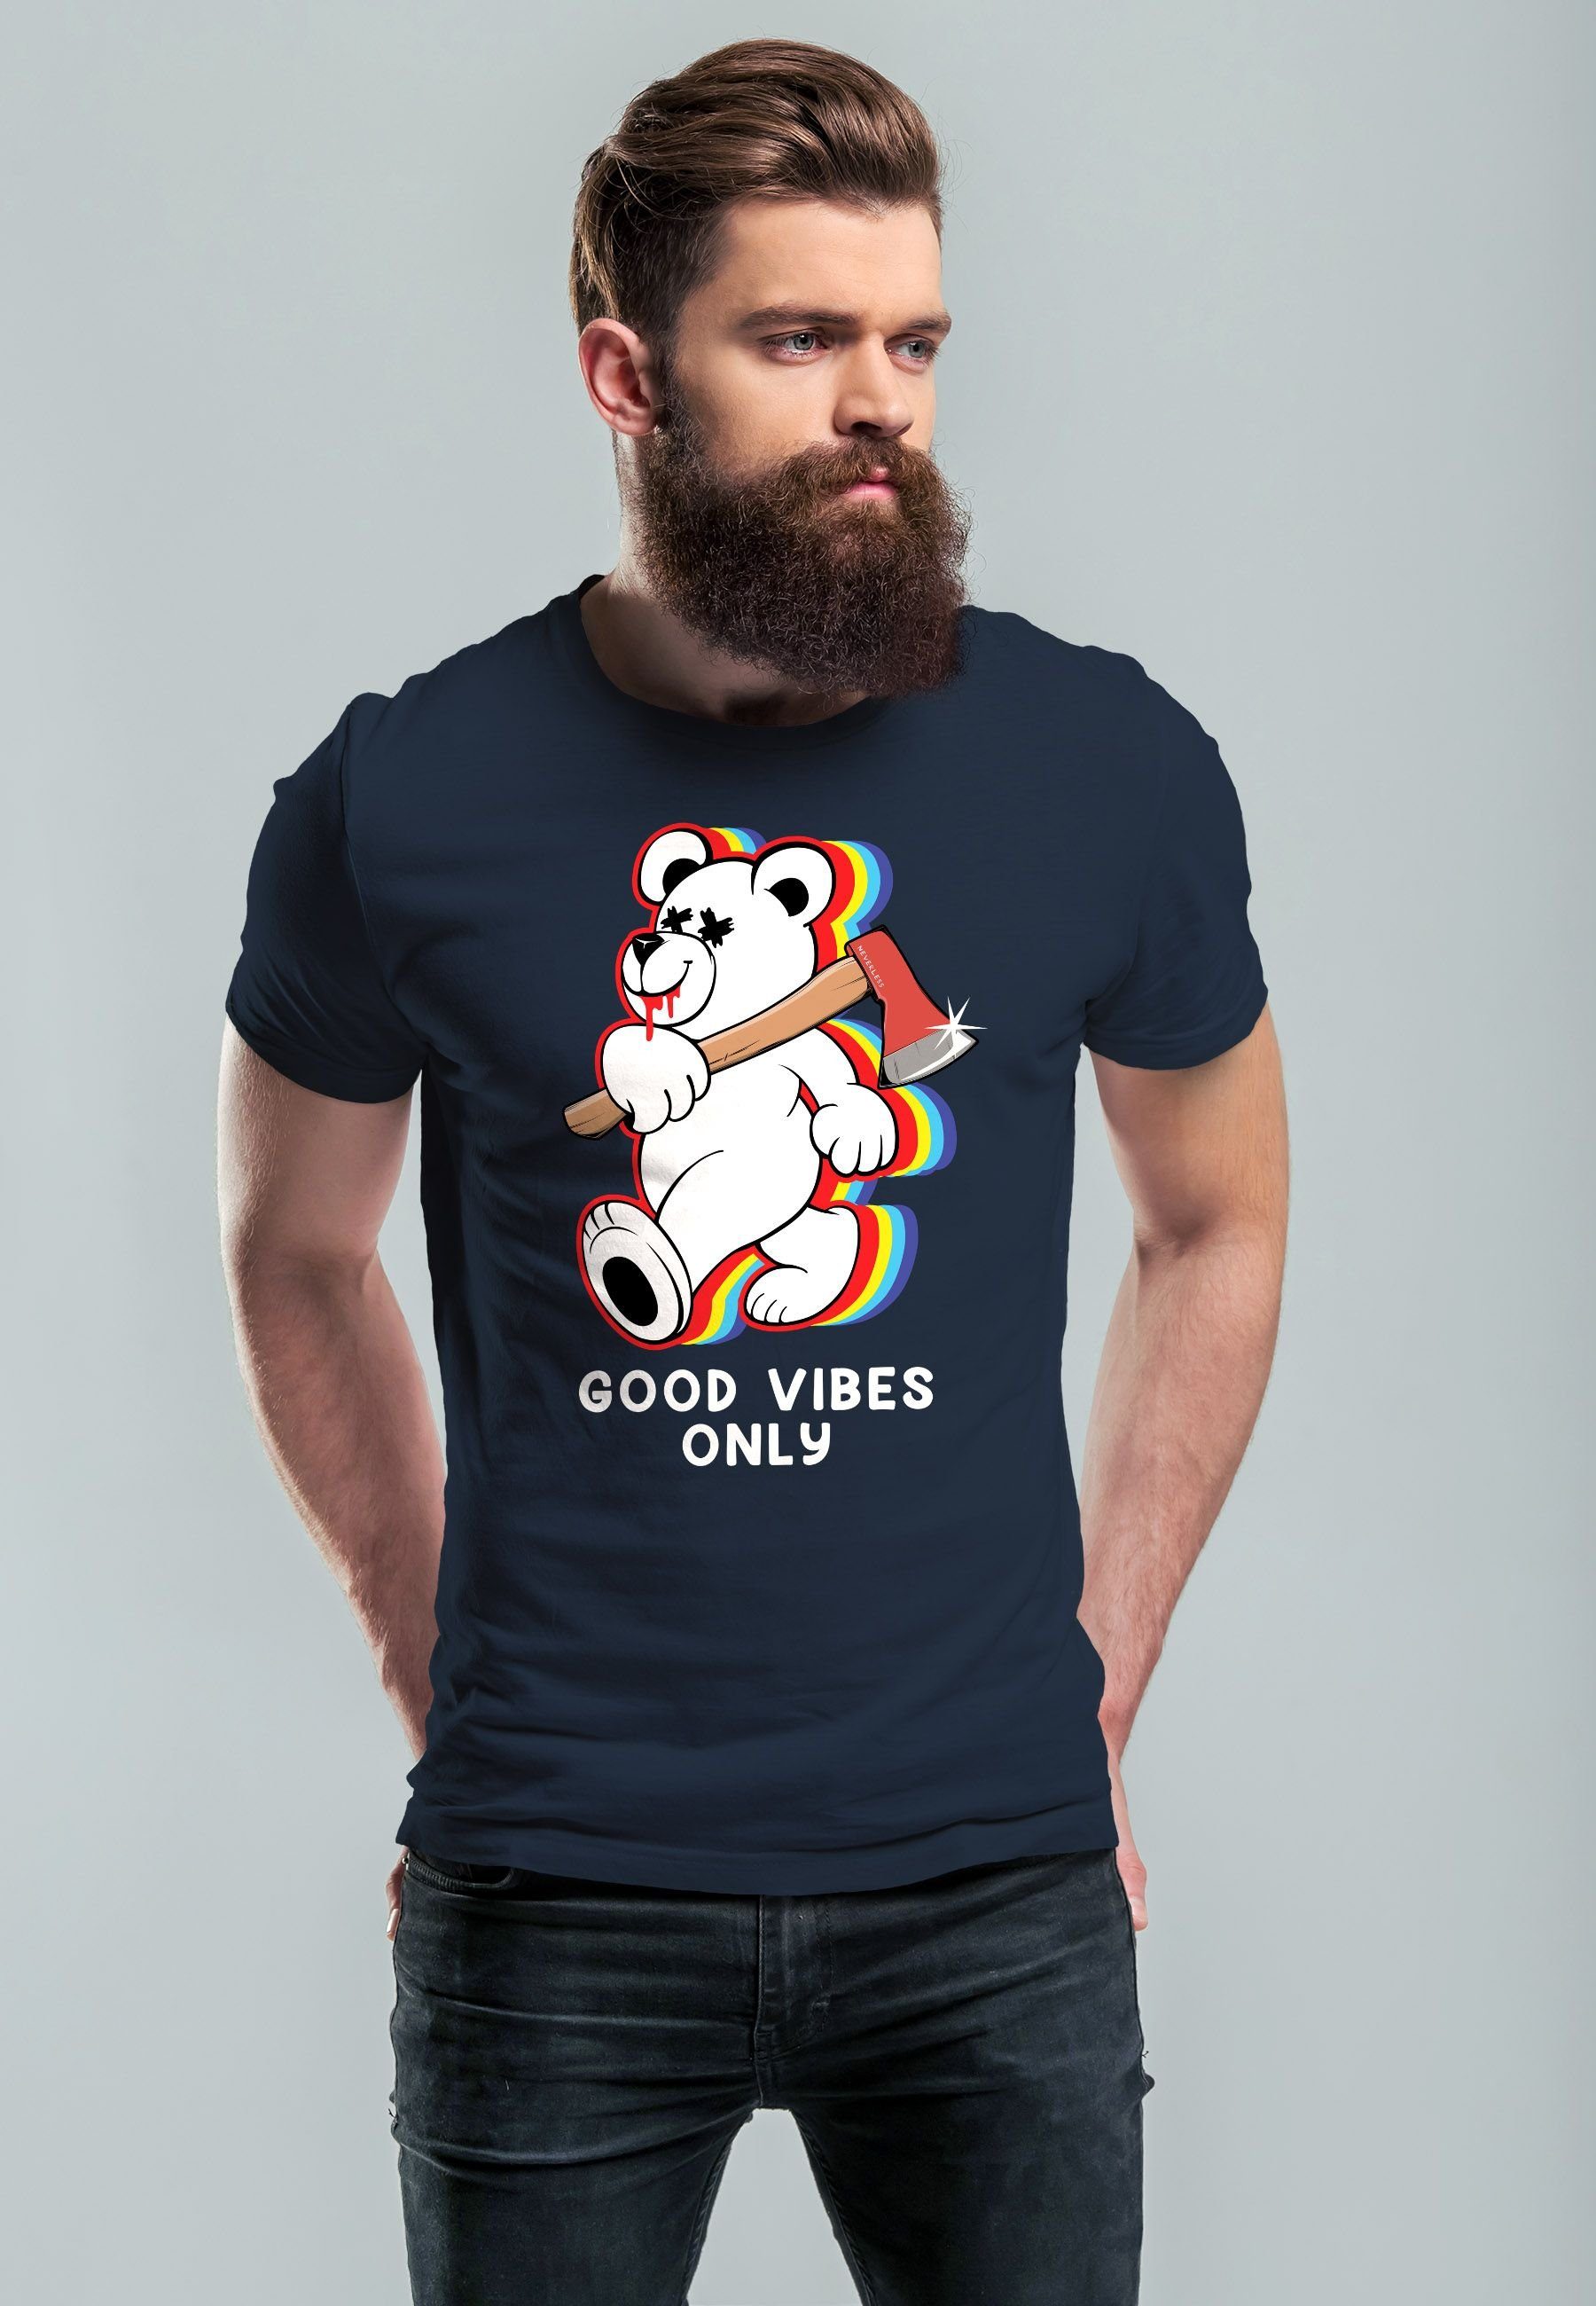 Neverless Print-Shirt Herren T-Shirt Good mit Vibes navy Axt Sarkasmus Teddy Teachwear Bär Only Fashi Print